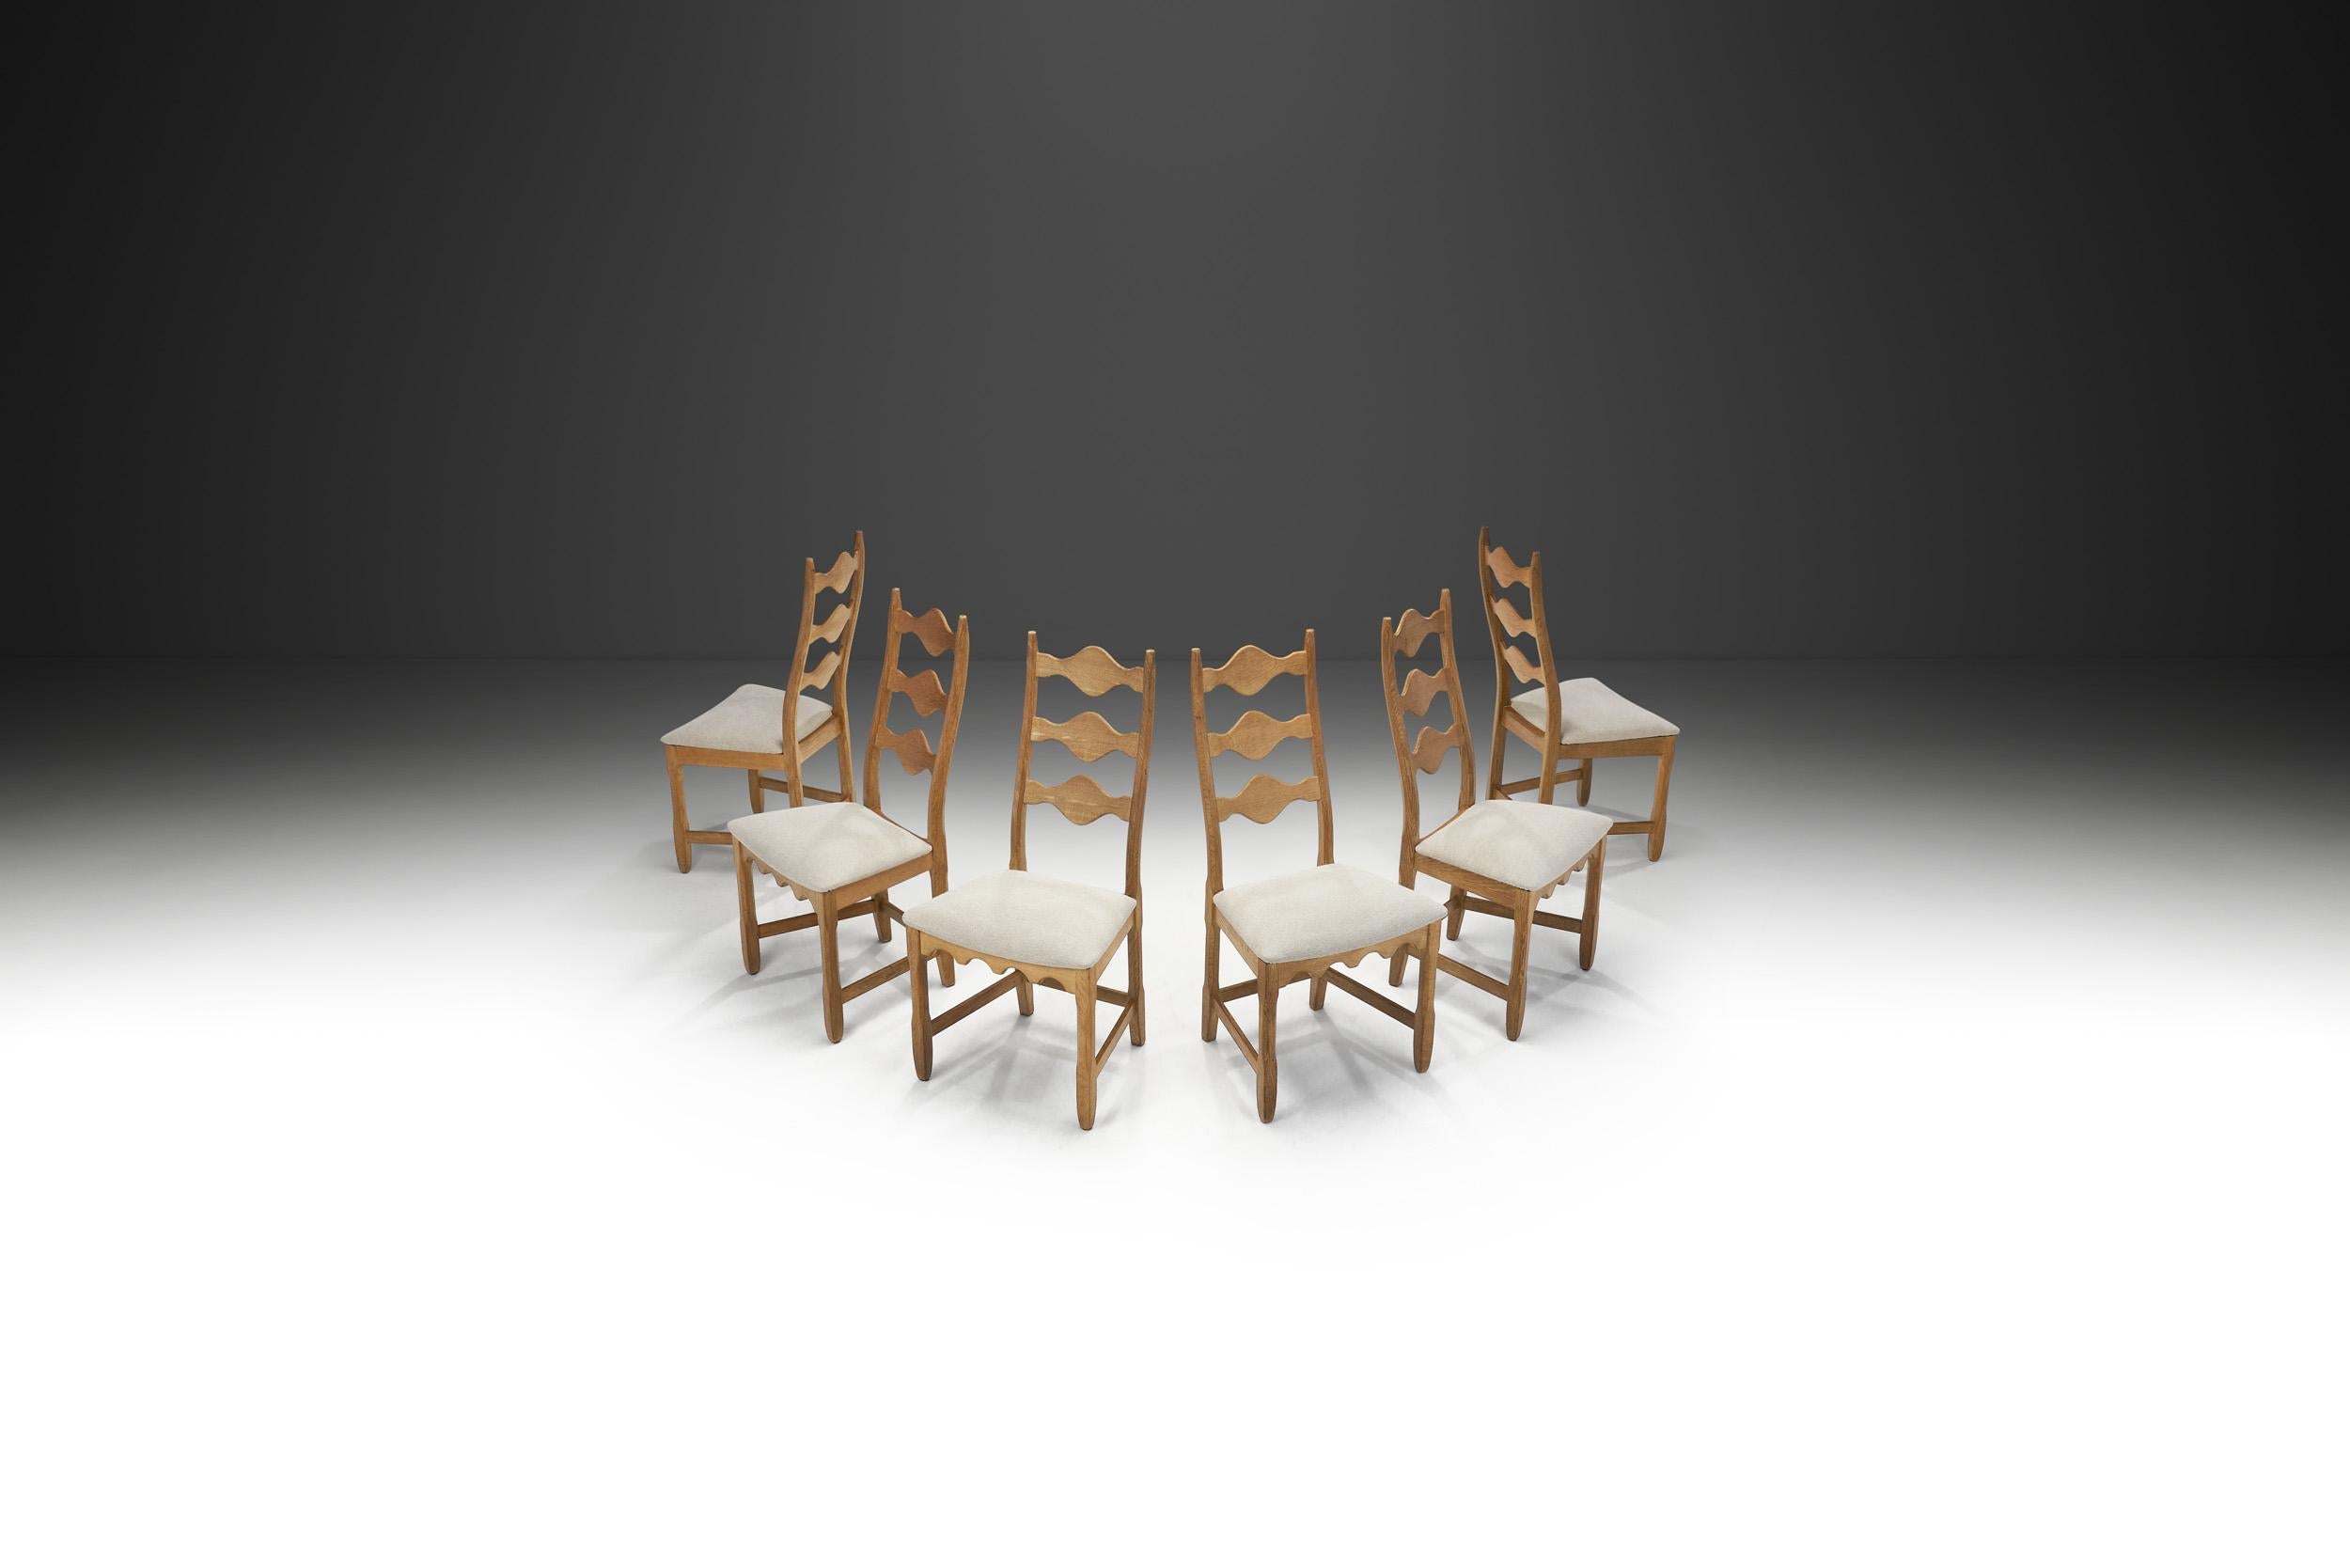 Danish Henning Kjaernulf Dining Chairs for Nyrup Møbelfabrik, Denmark 1950s For Sale